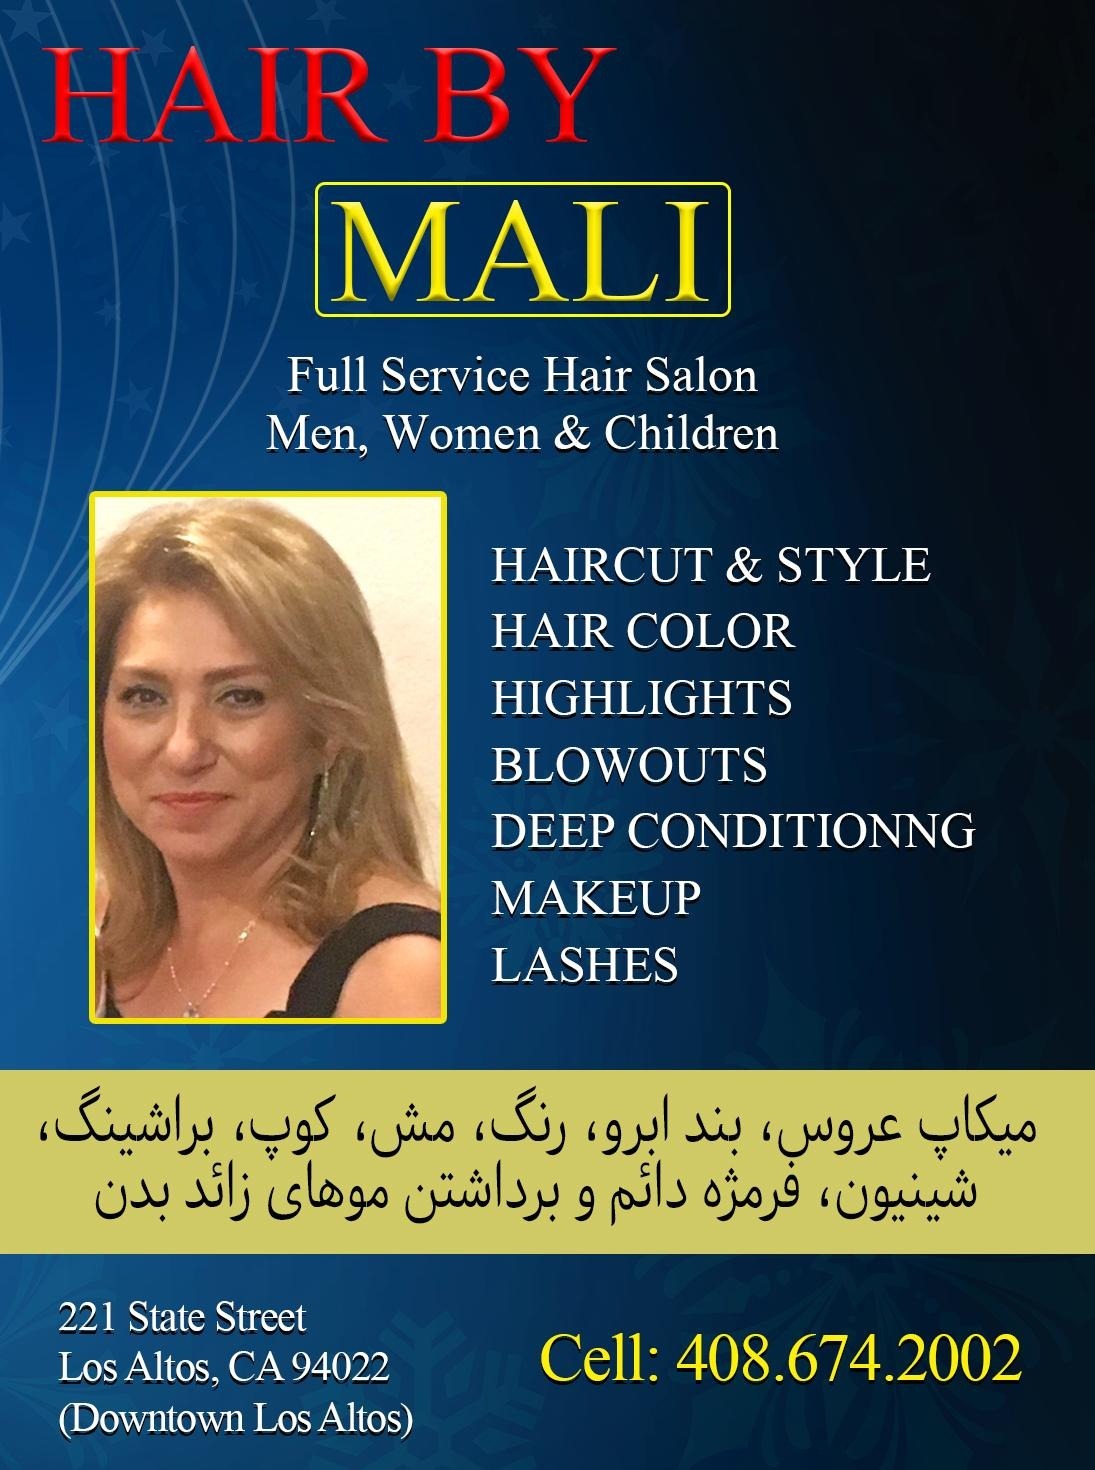 Hair by mali